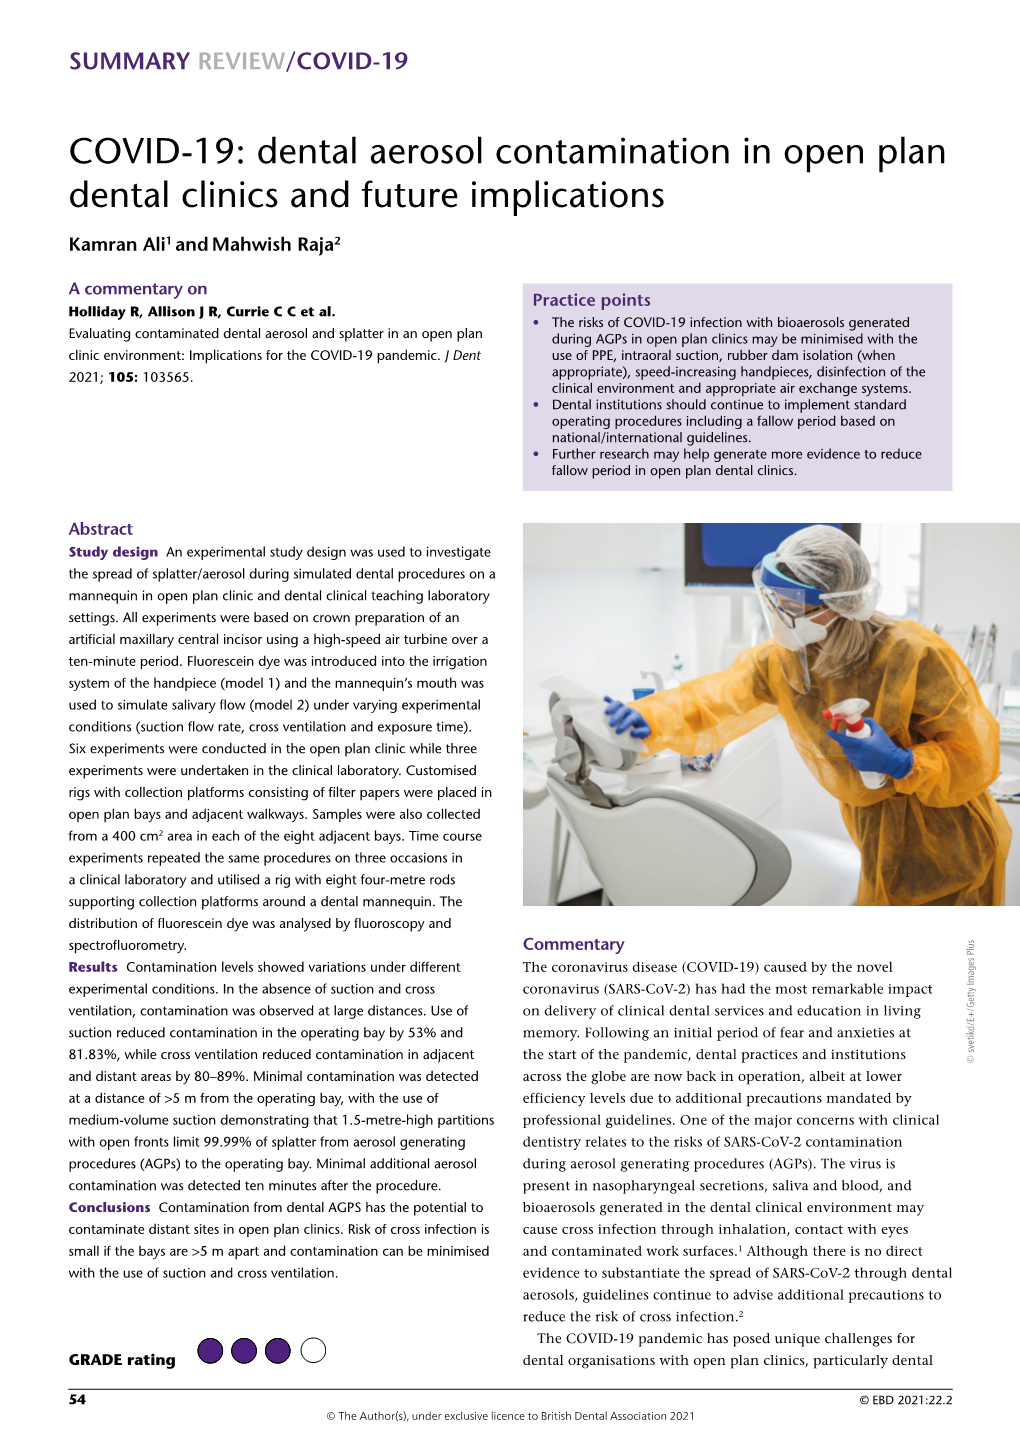 COVID-19: Dental Aerosol Contamination in Open Plan Dental Clinics and Future Implications